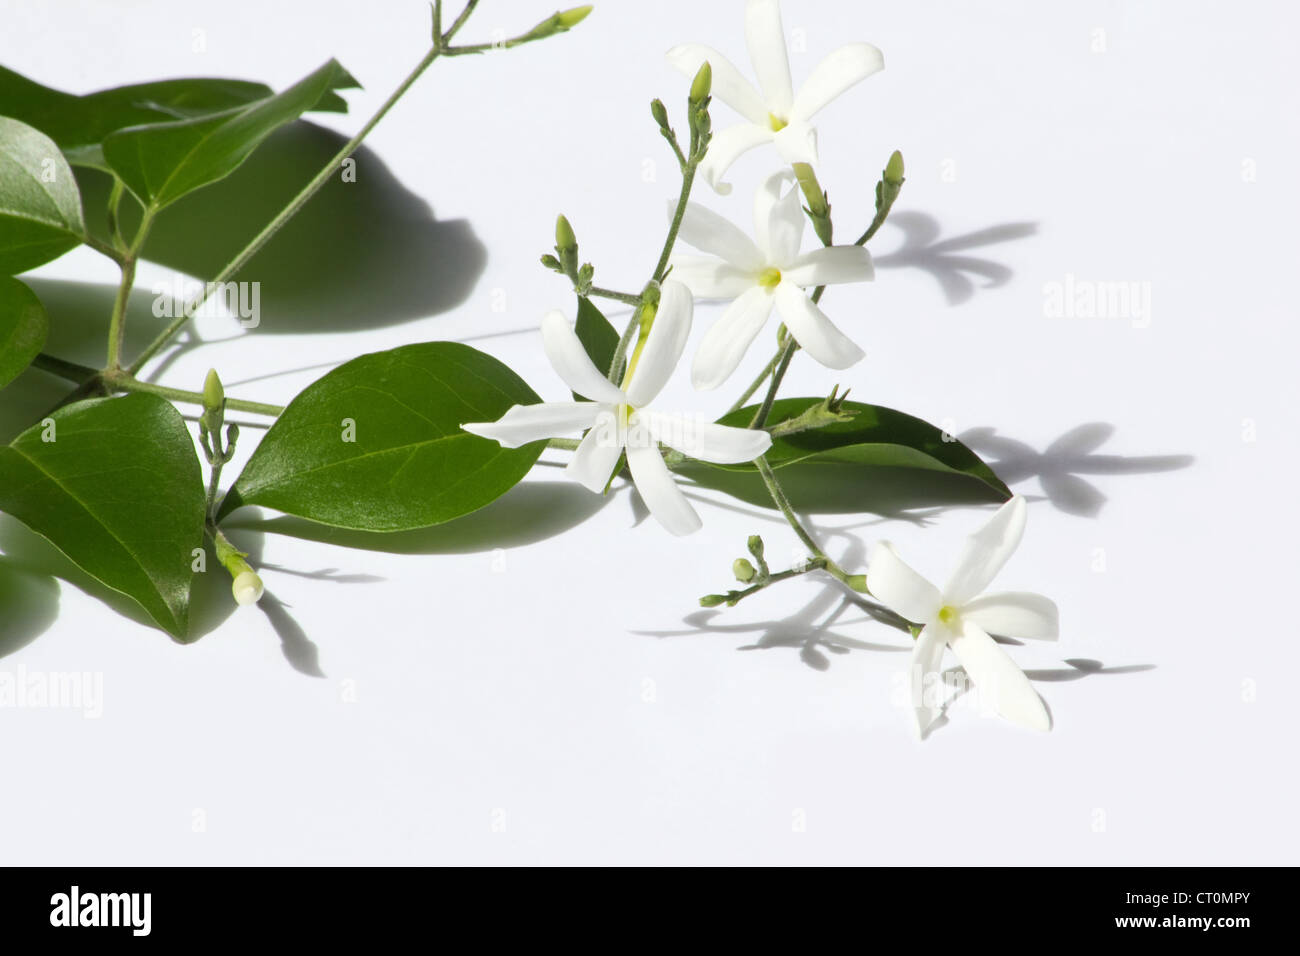 Azores jasmine plant and flowers (Jasminum azoricum) on white background Stock Photo